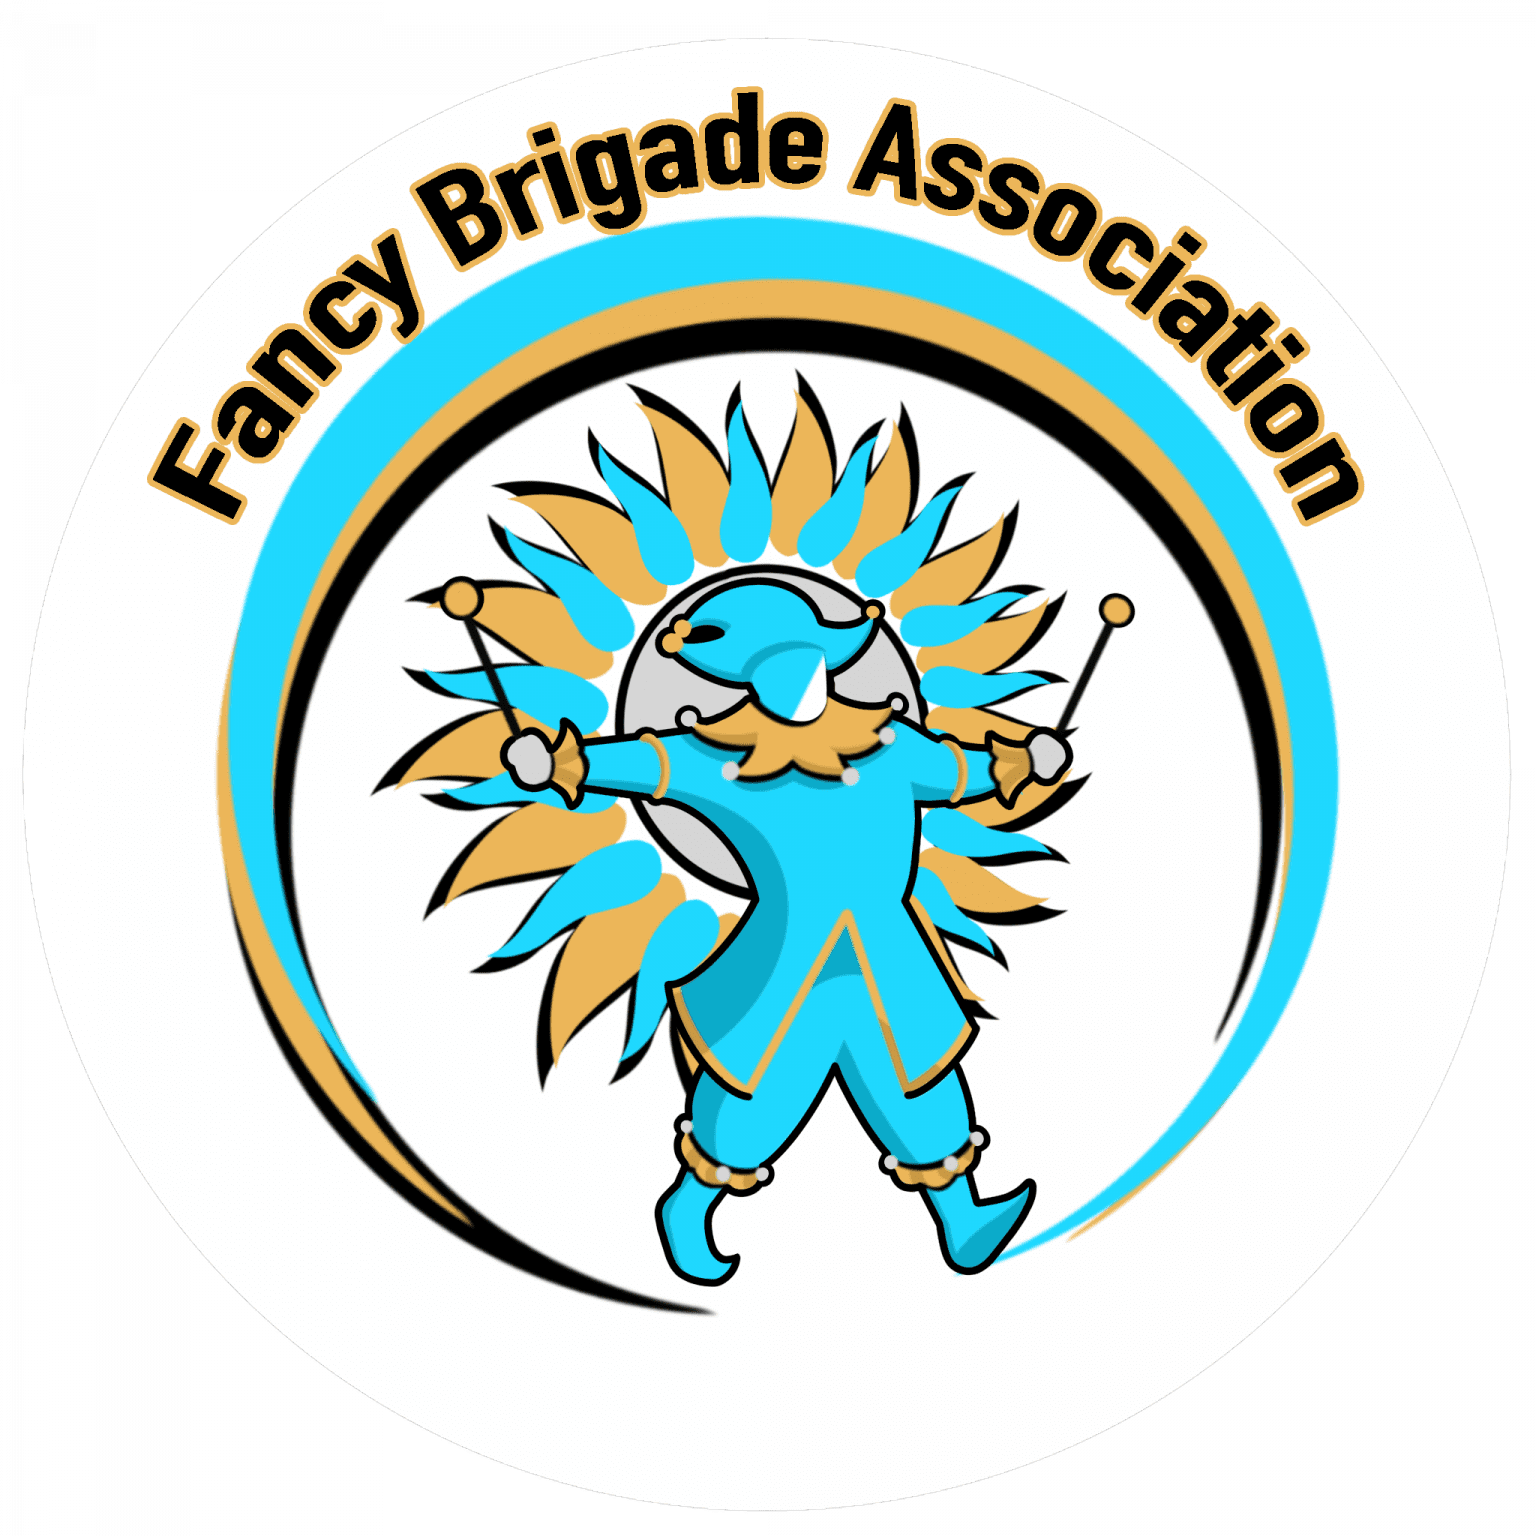 New Year's Day In Philadelphia Fancy Brigade Association